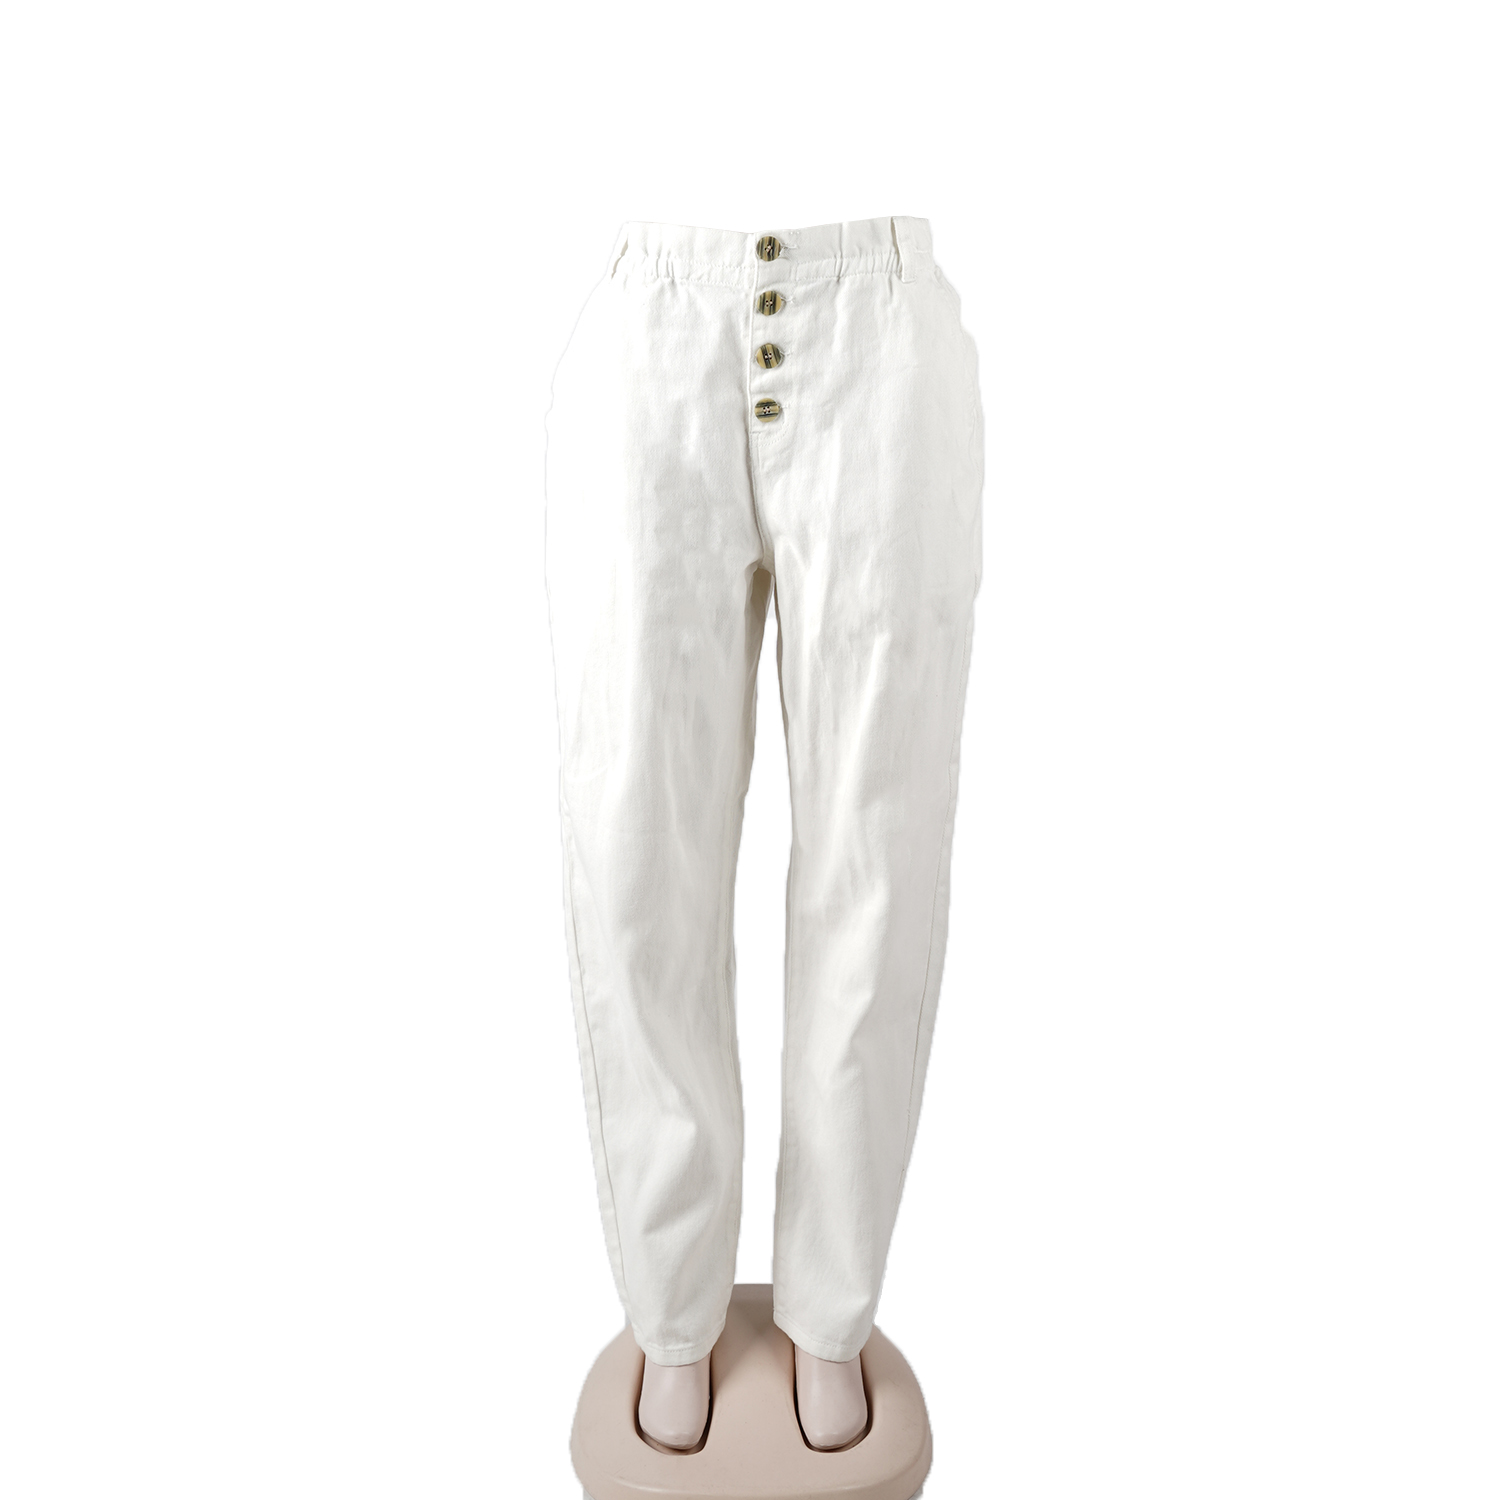 SKYKINGDOM new design jeans creamy white office lady style elastic waist buttons denim jeans